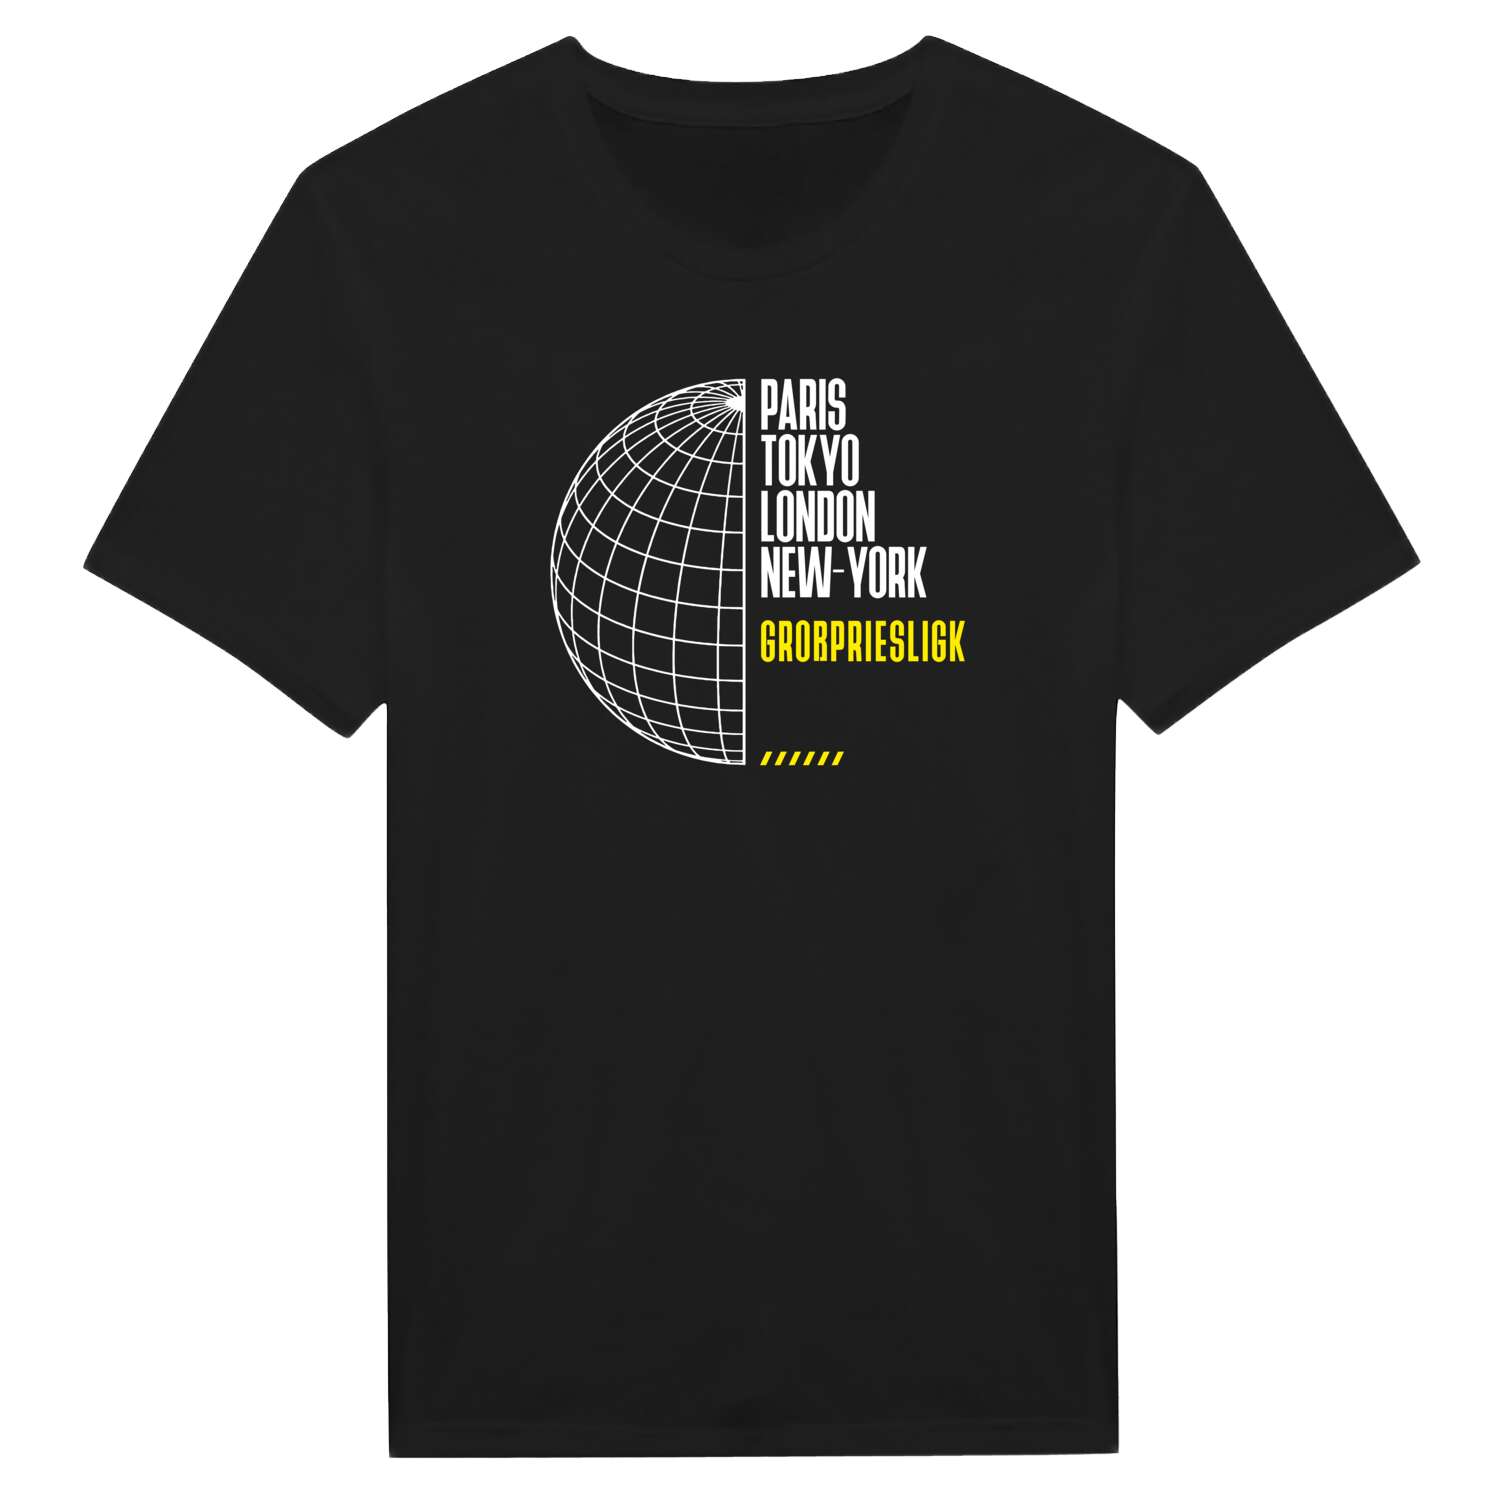 Großpriesligk T-Shirt »Paris Tokyo London«